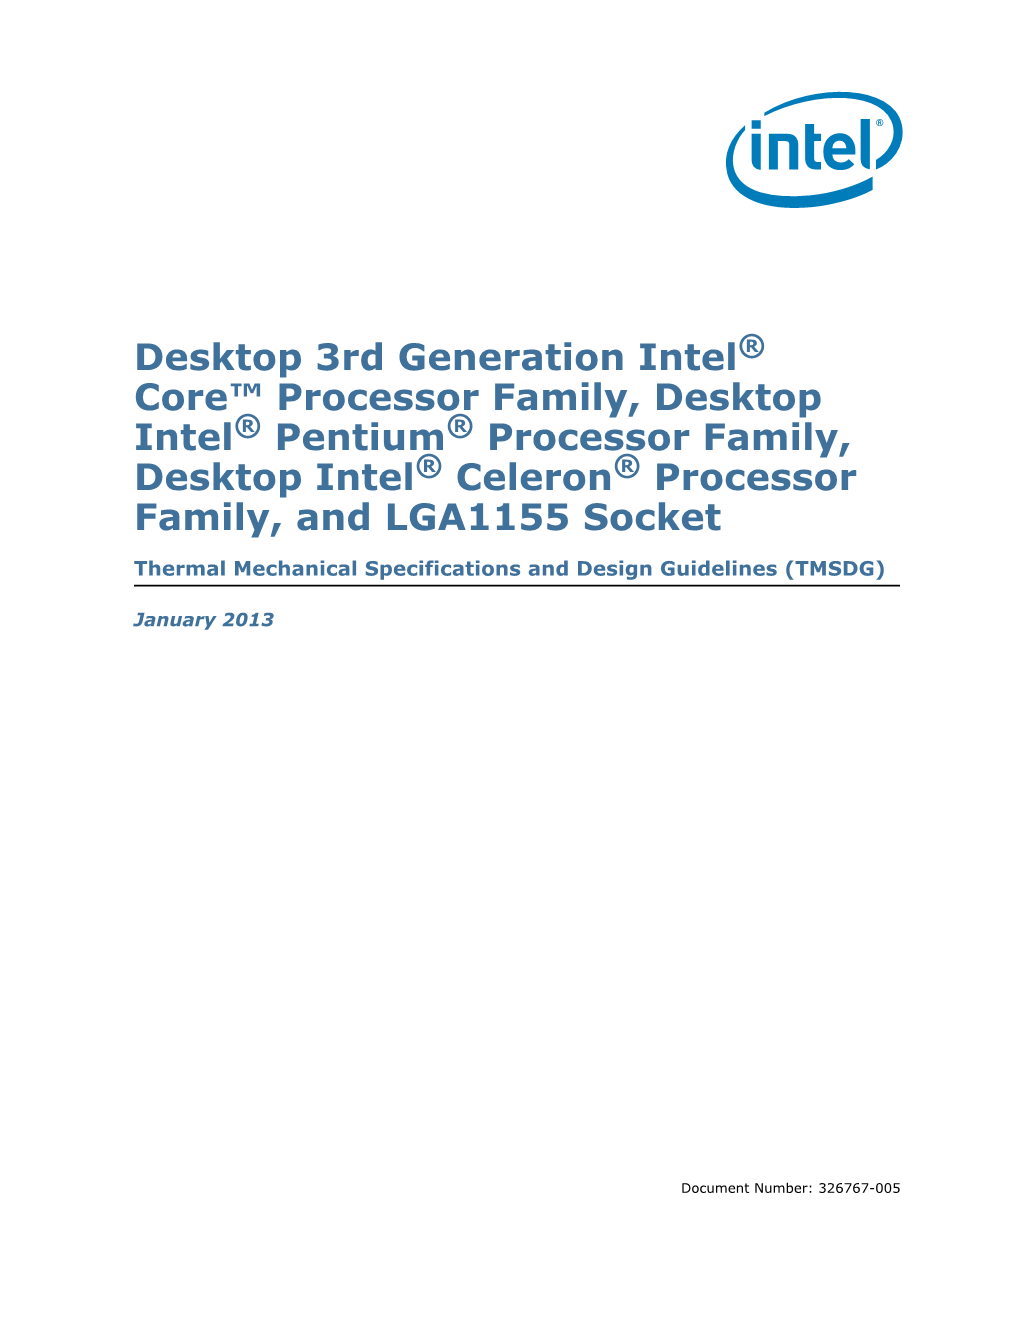 Desktop 3Rd Generation Intel® Core™ Processor Family, Desktop Intel® Pentium® Processor Family, Desktop Intel® Celeron® Processor Family, and LGA1155 Socket